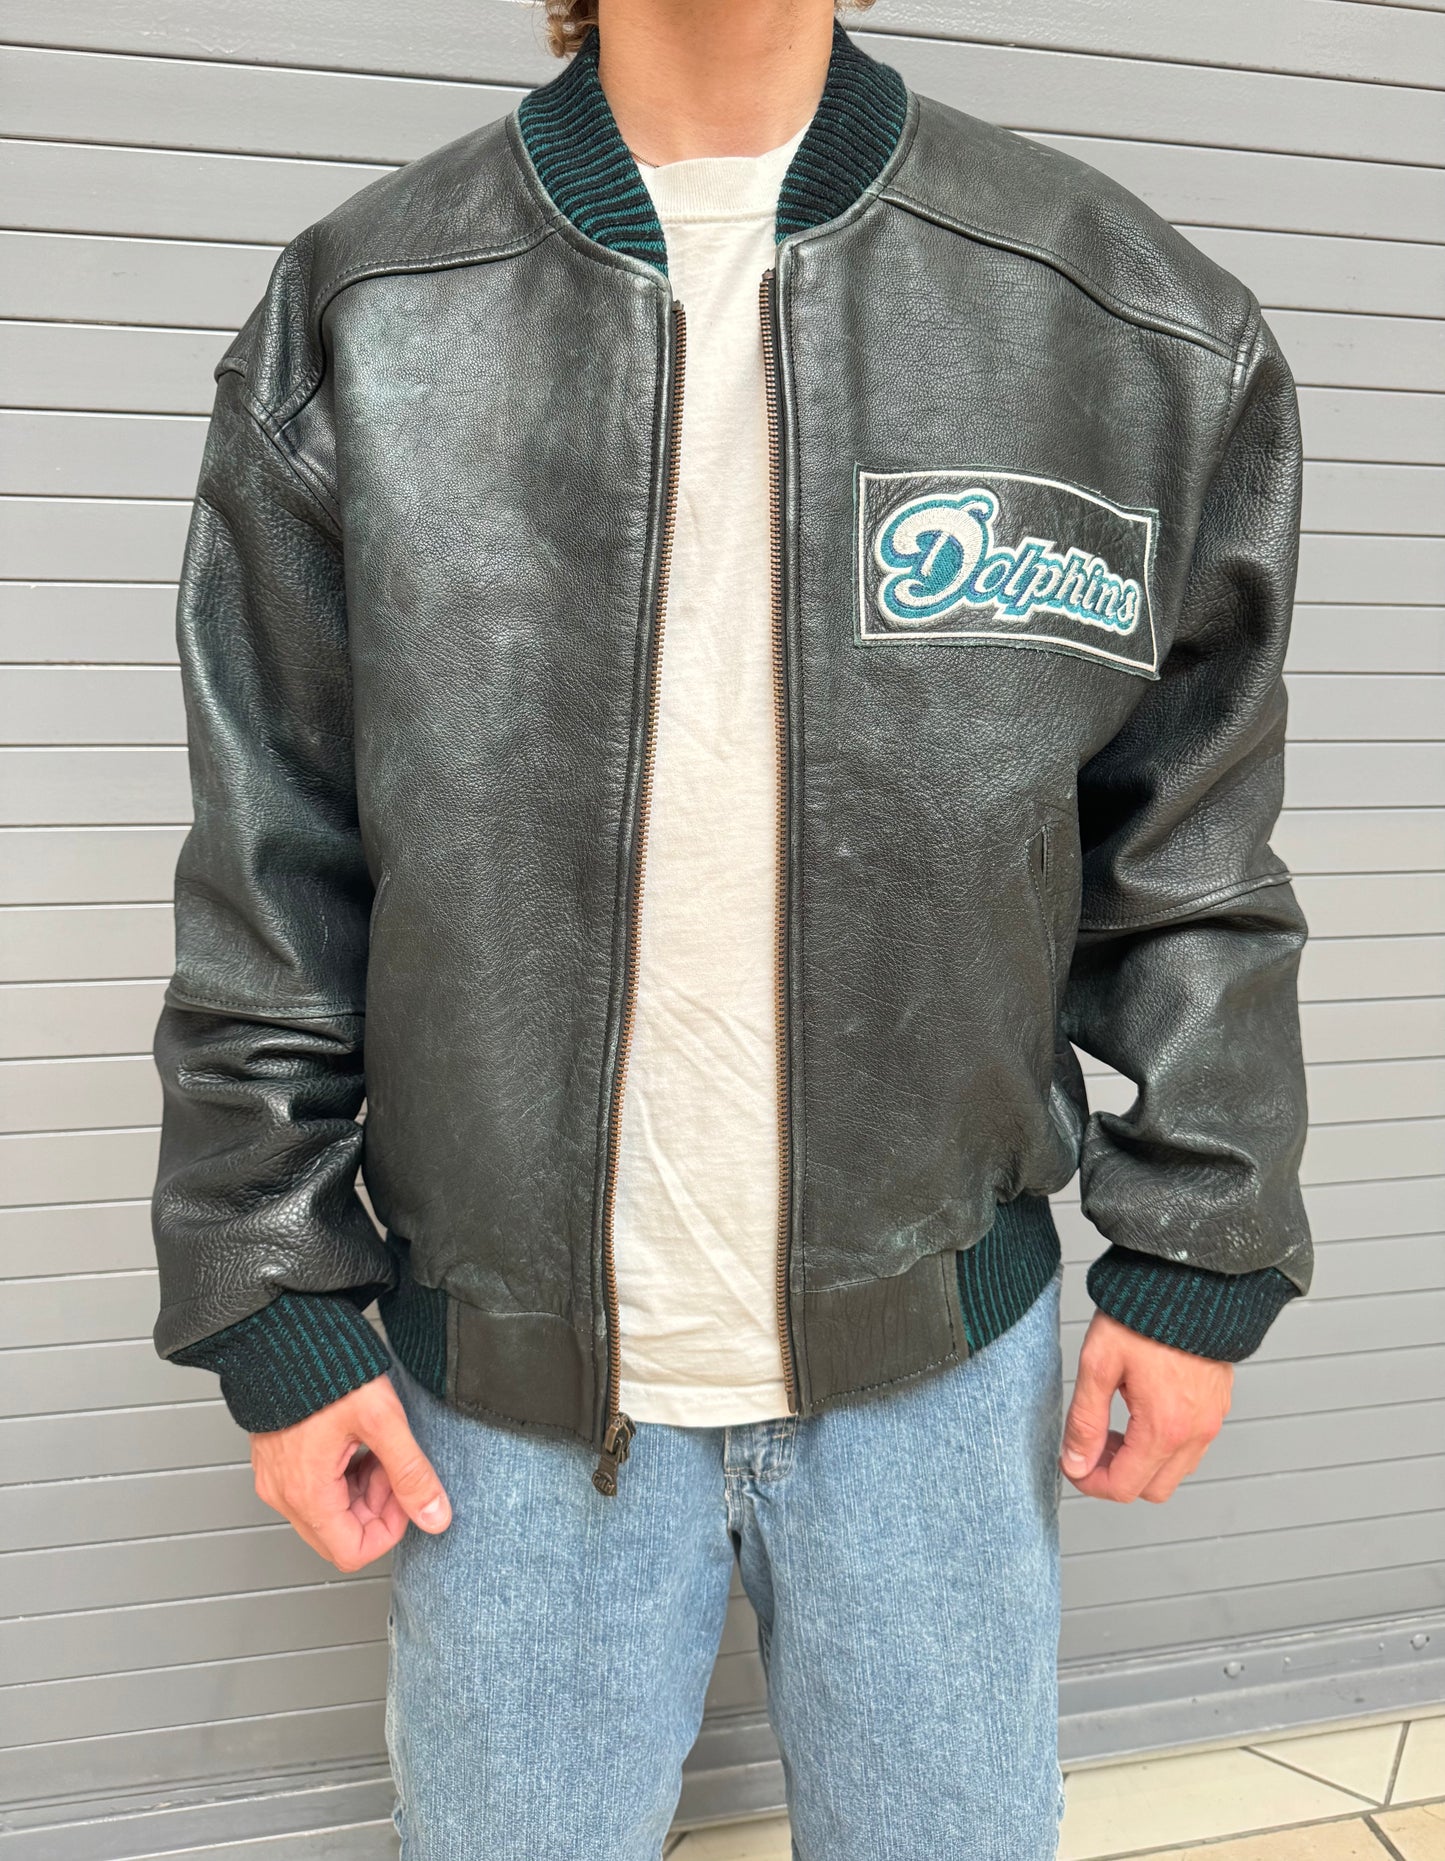 Miami Dolphin's Leather Jacket